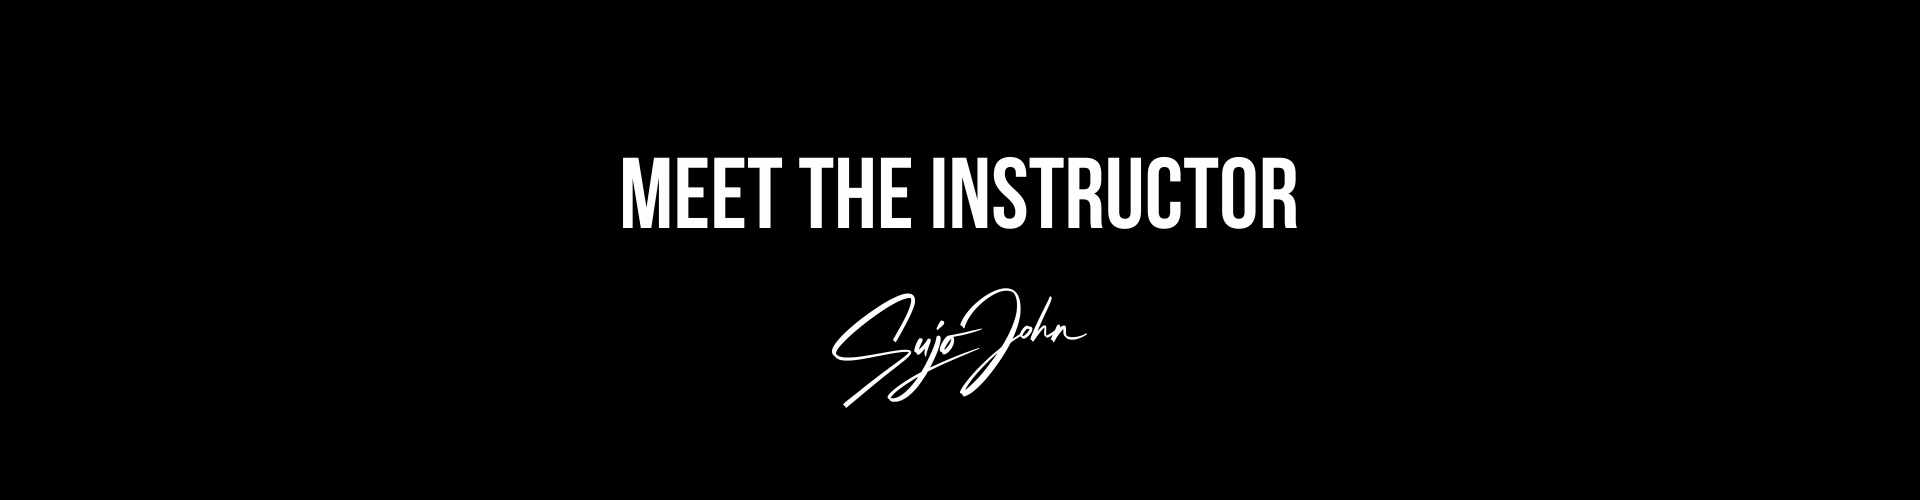 Meet the Instructor, Sujo John